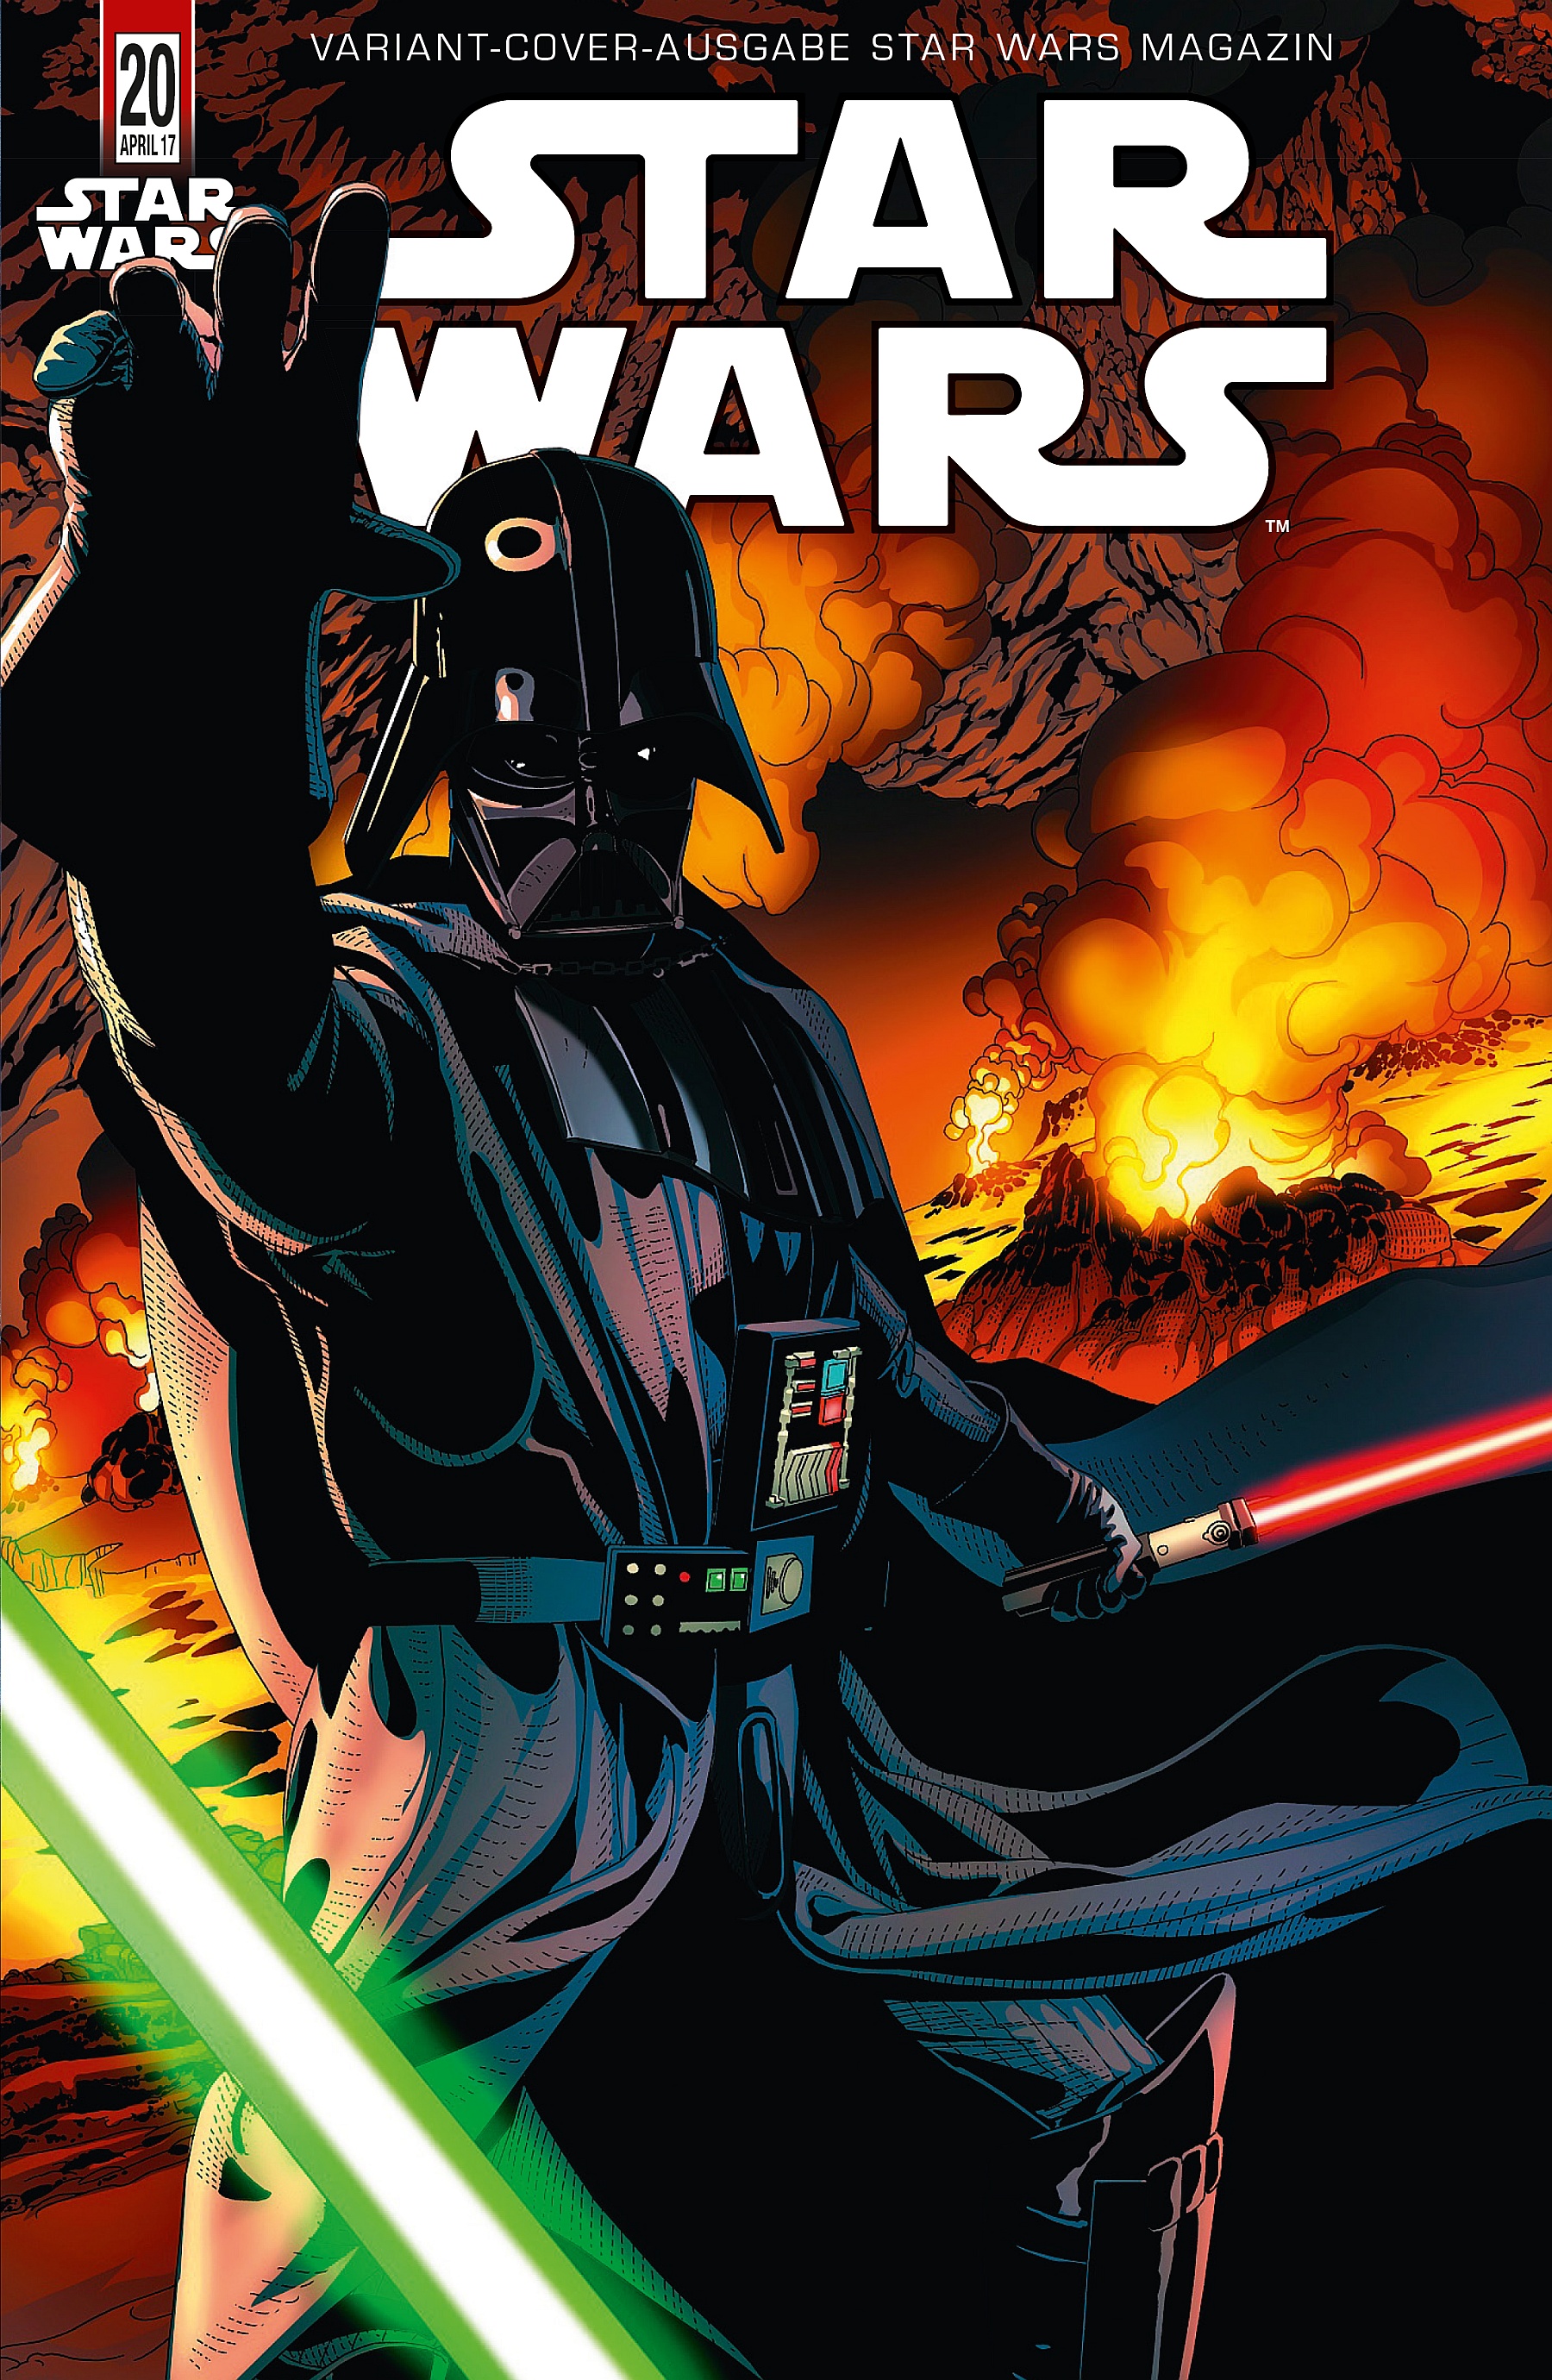 Star Wars #20 (Salvador Larroca Journal of the Whills Variantcover) (23.03.2017)